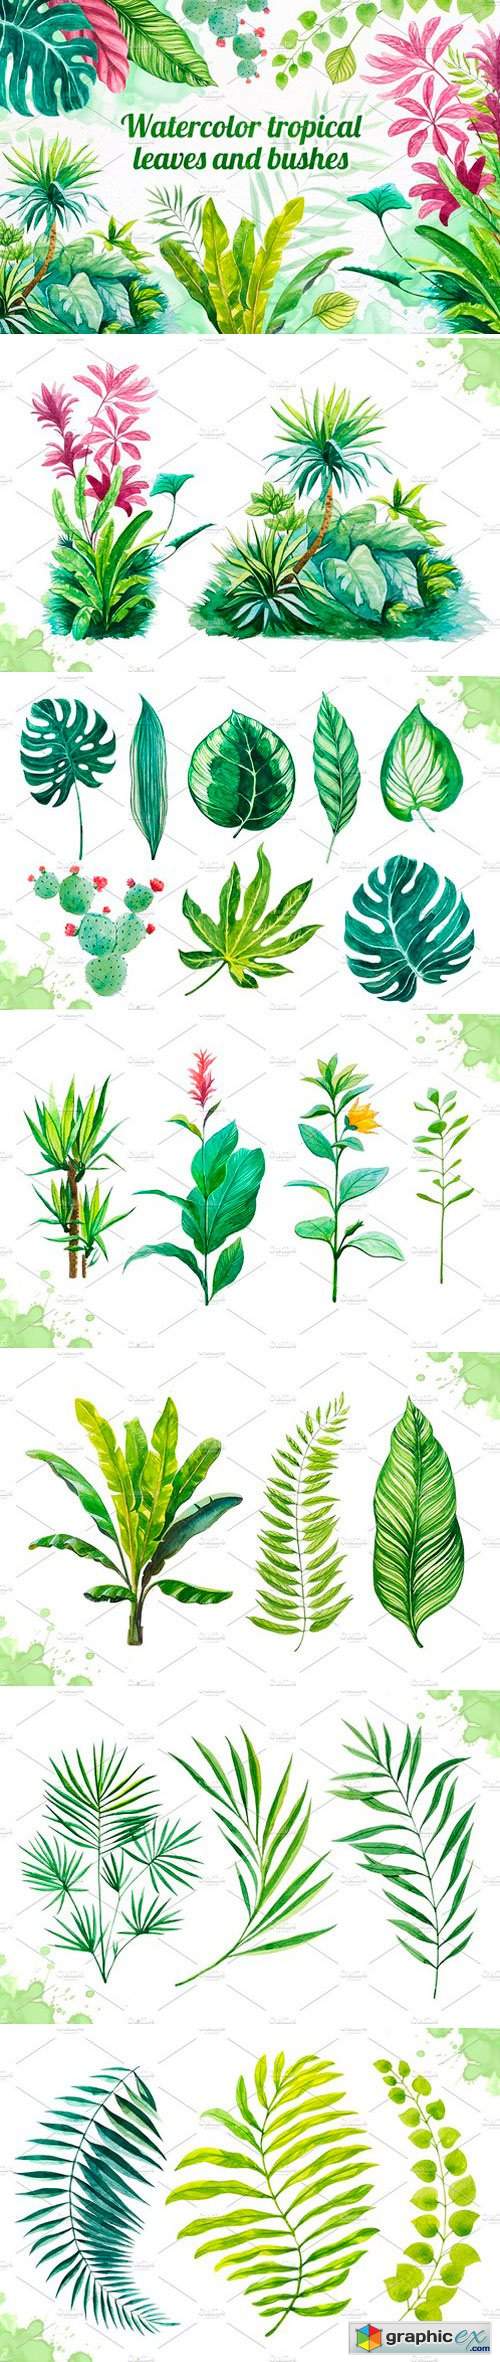 Watercolor tropical leaves set#2